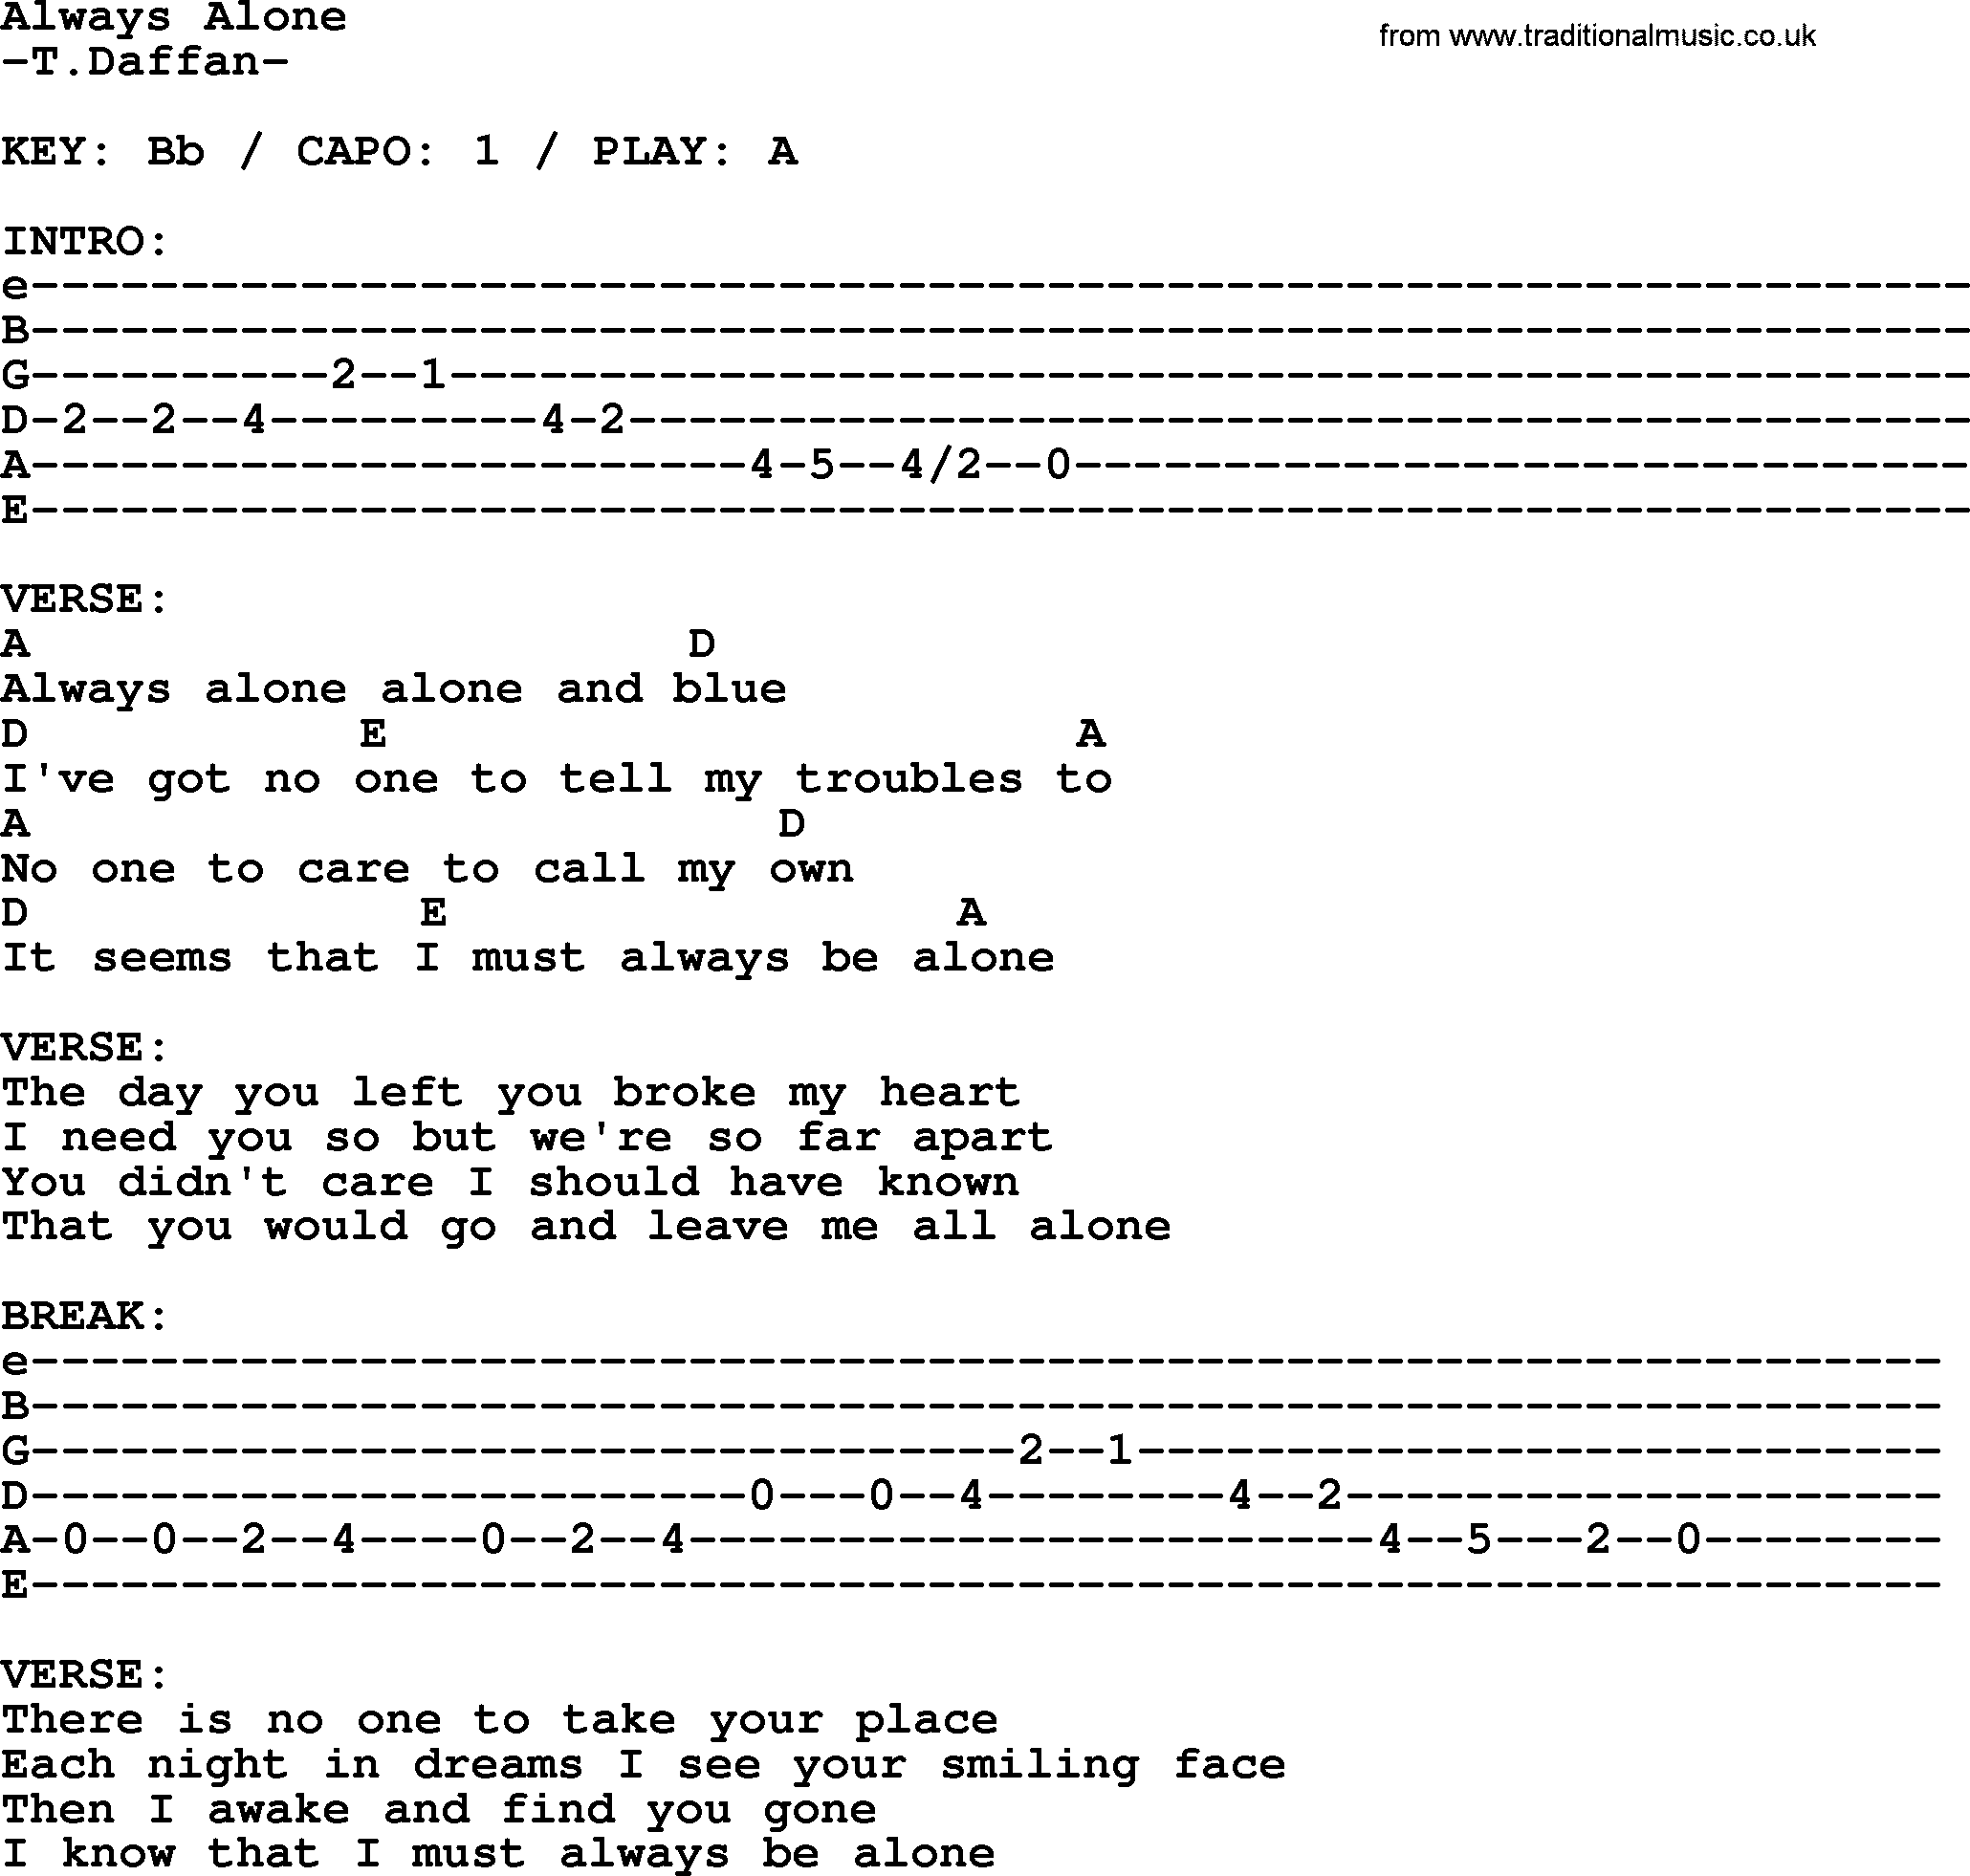 Johnny Cash song Always Alone, lyrics and chords